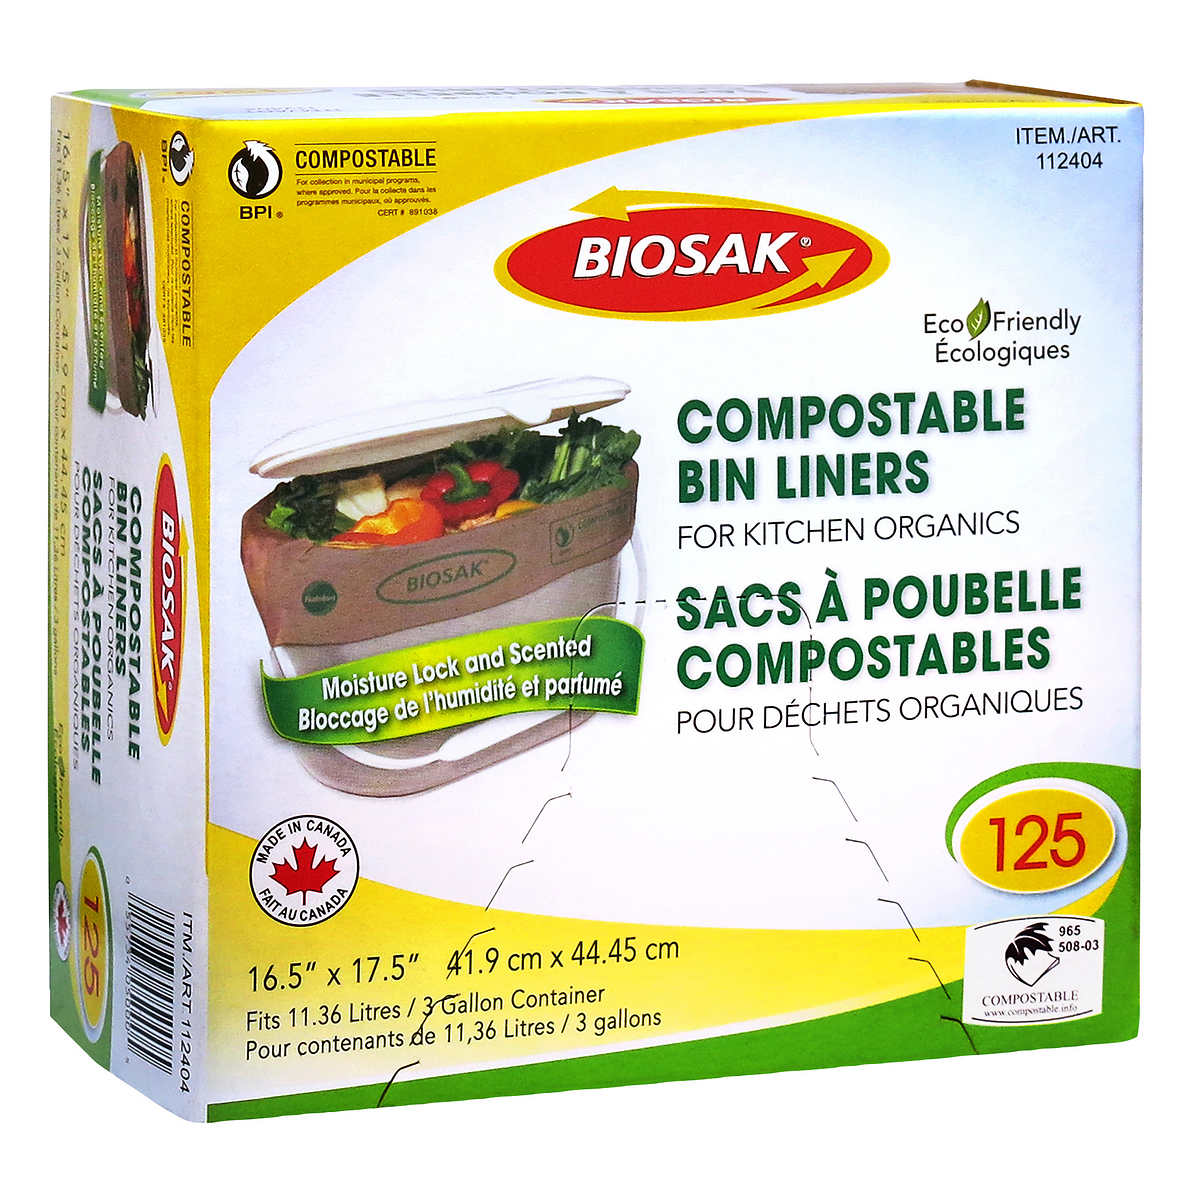 Biosak Compostable Bin Liners, 125 Count